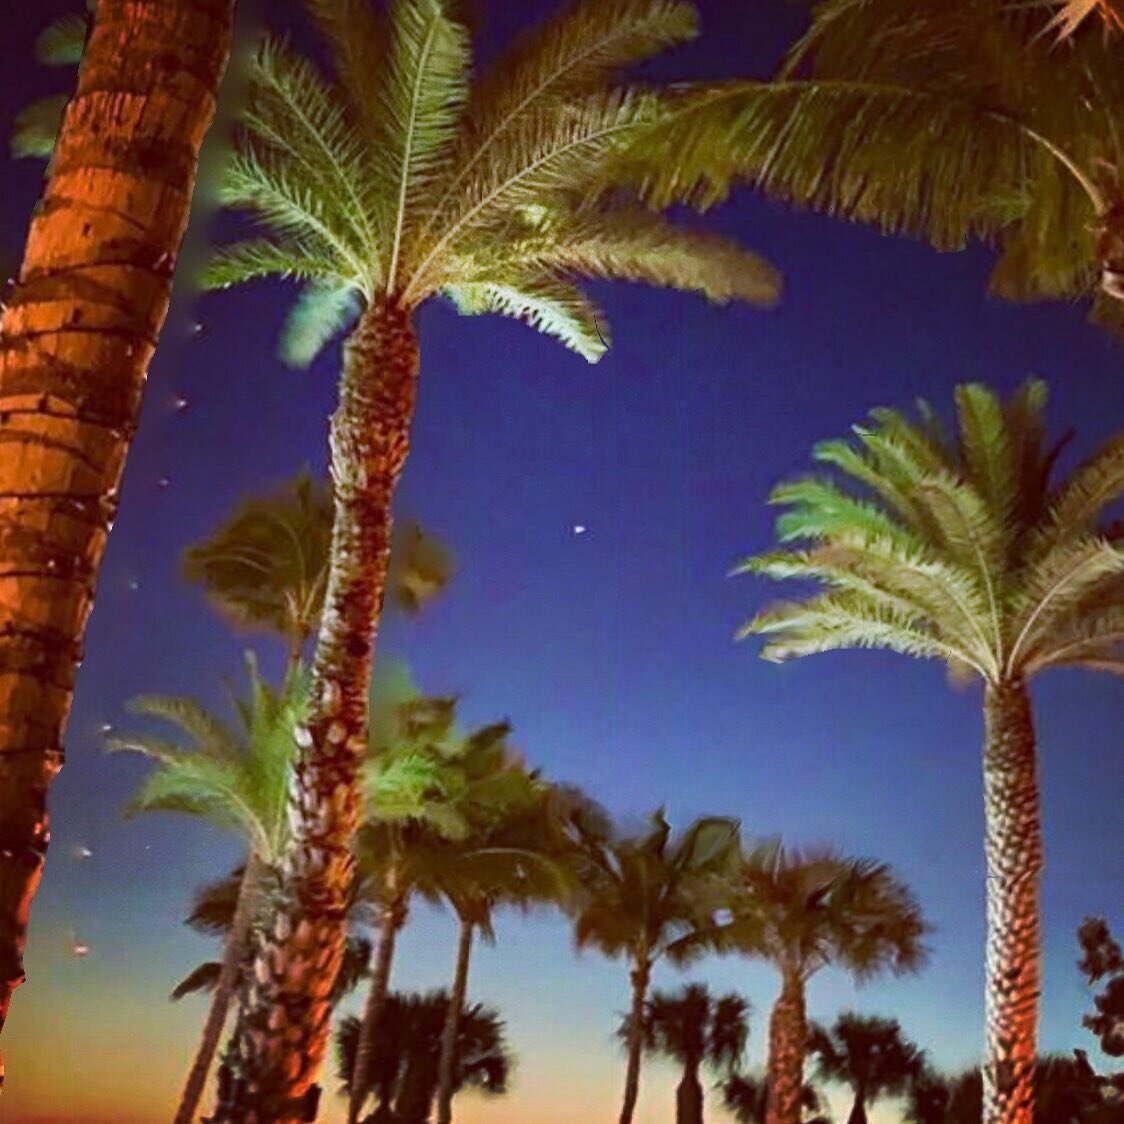 Winter nights #swfl #swflorida #palmtrees #nightsky